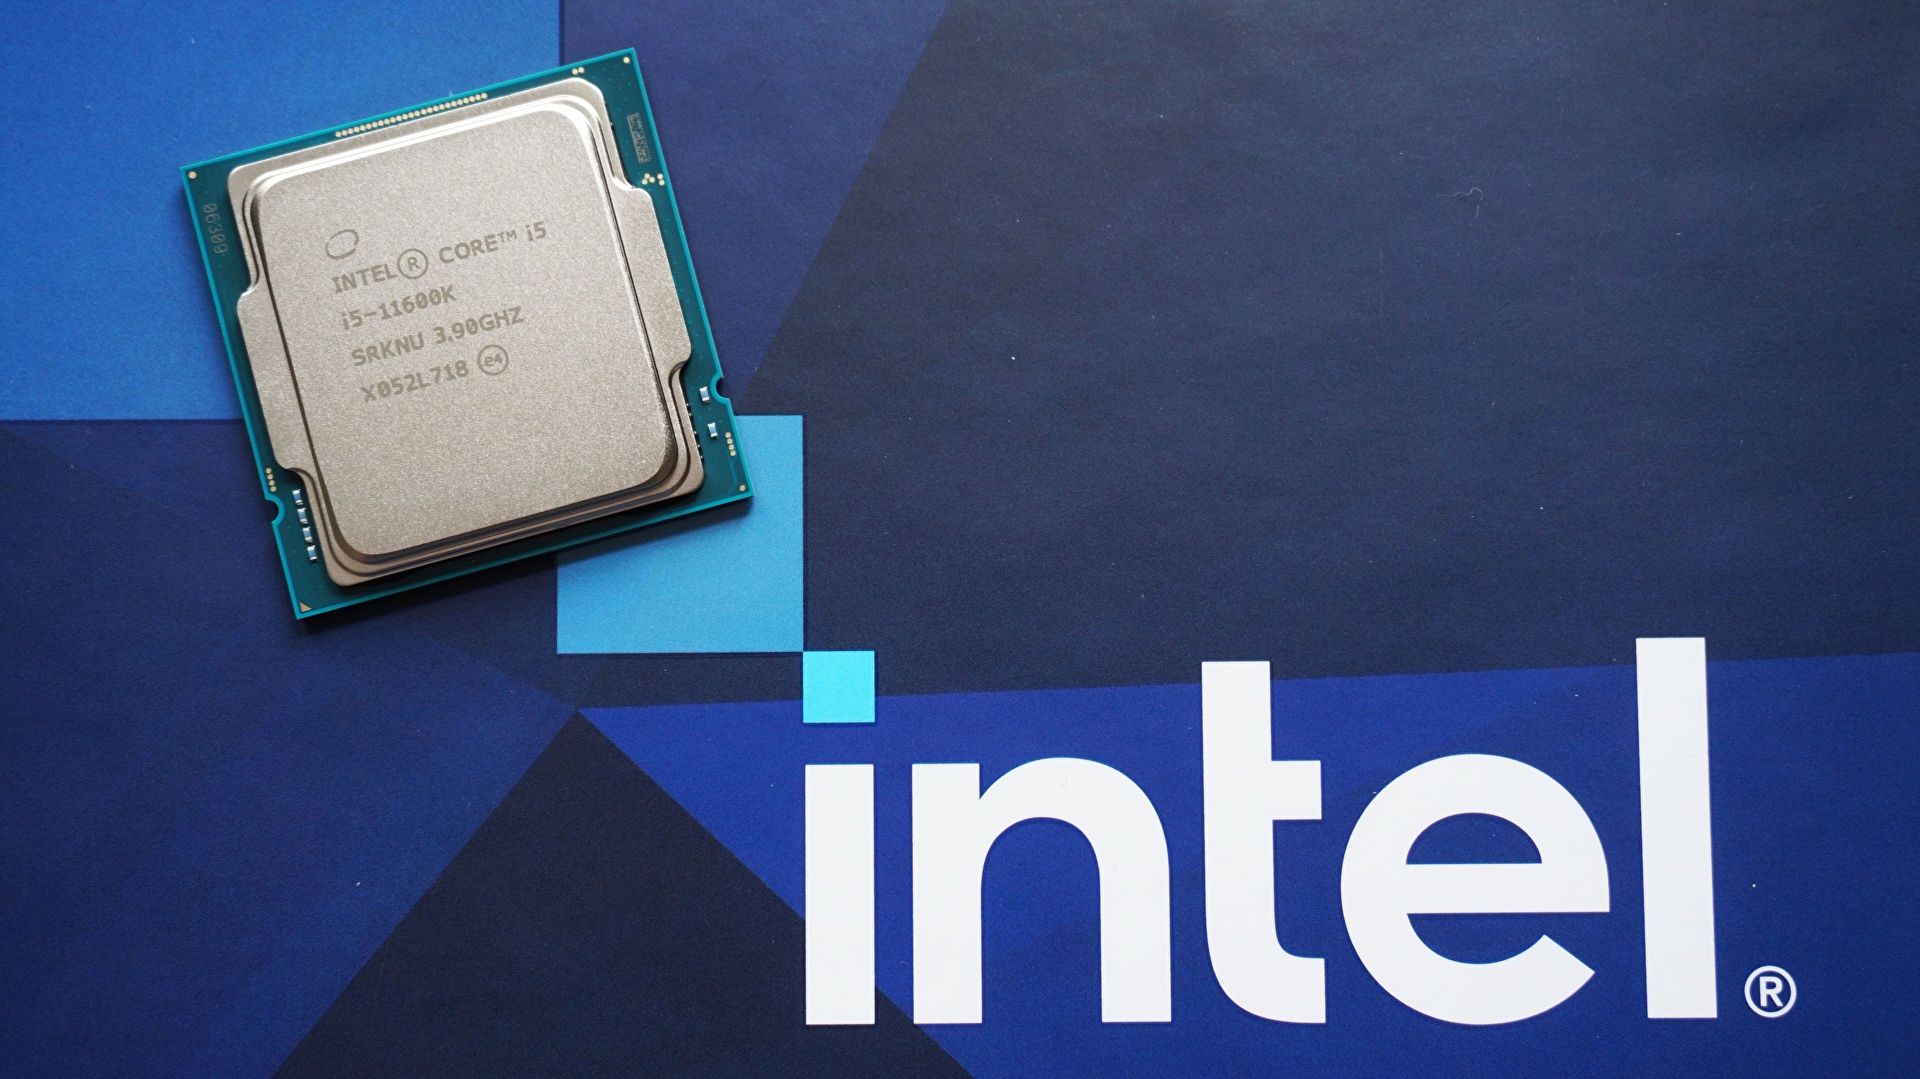 Tổng quan về Intel Core i5-11600K